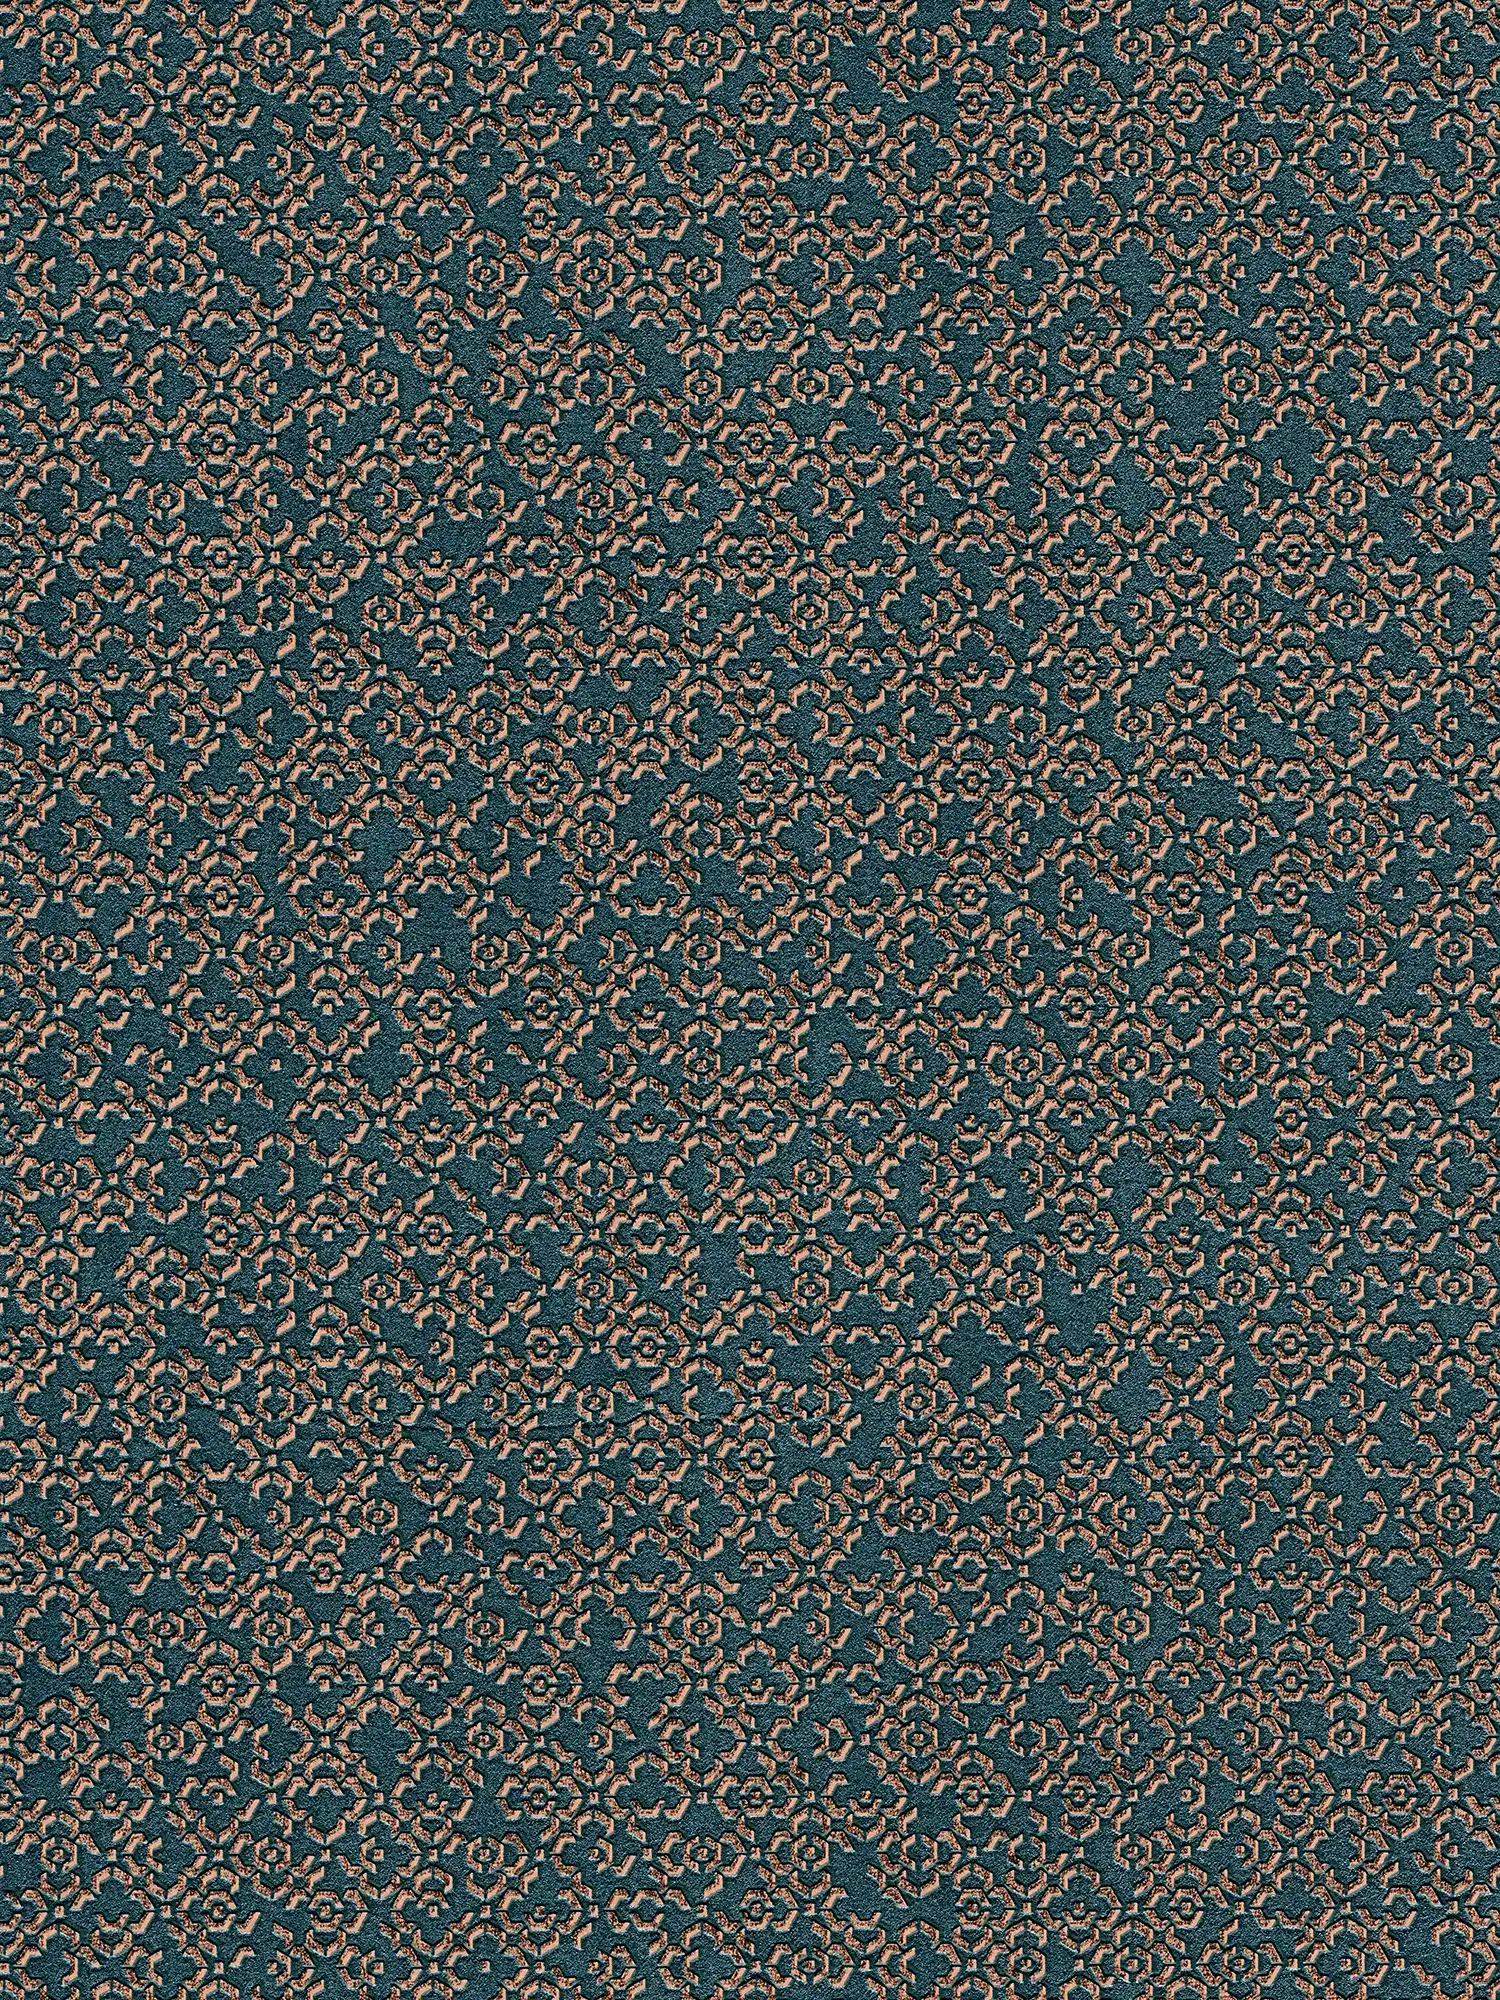 3D pattern wallpaper with metallic effect - blue, grey, metallic
